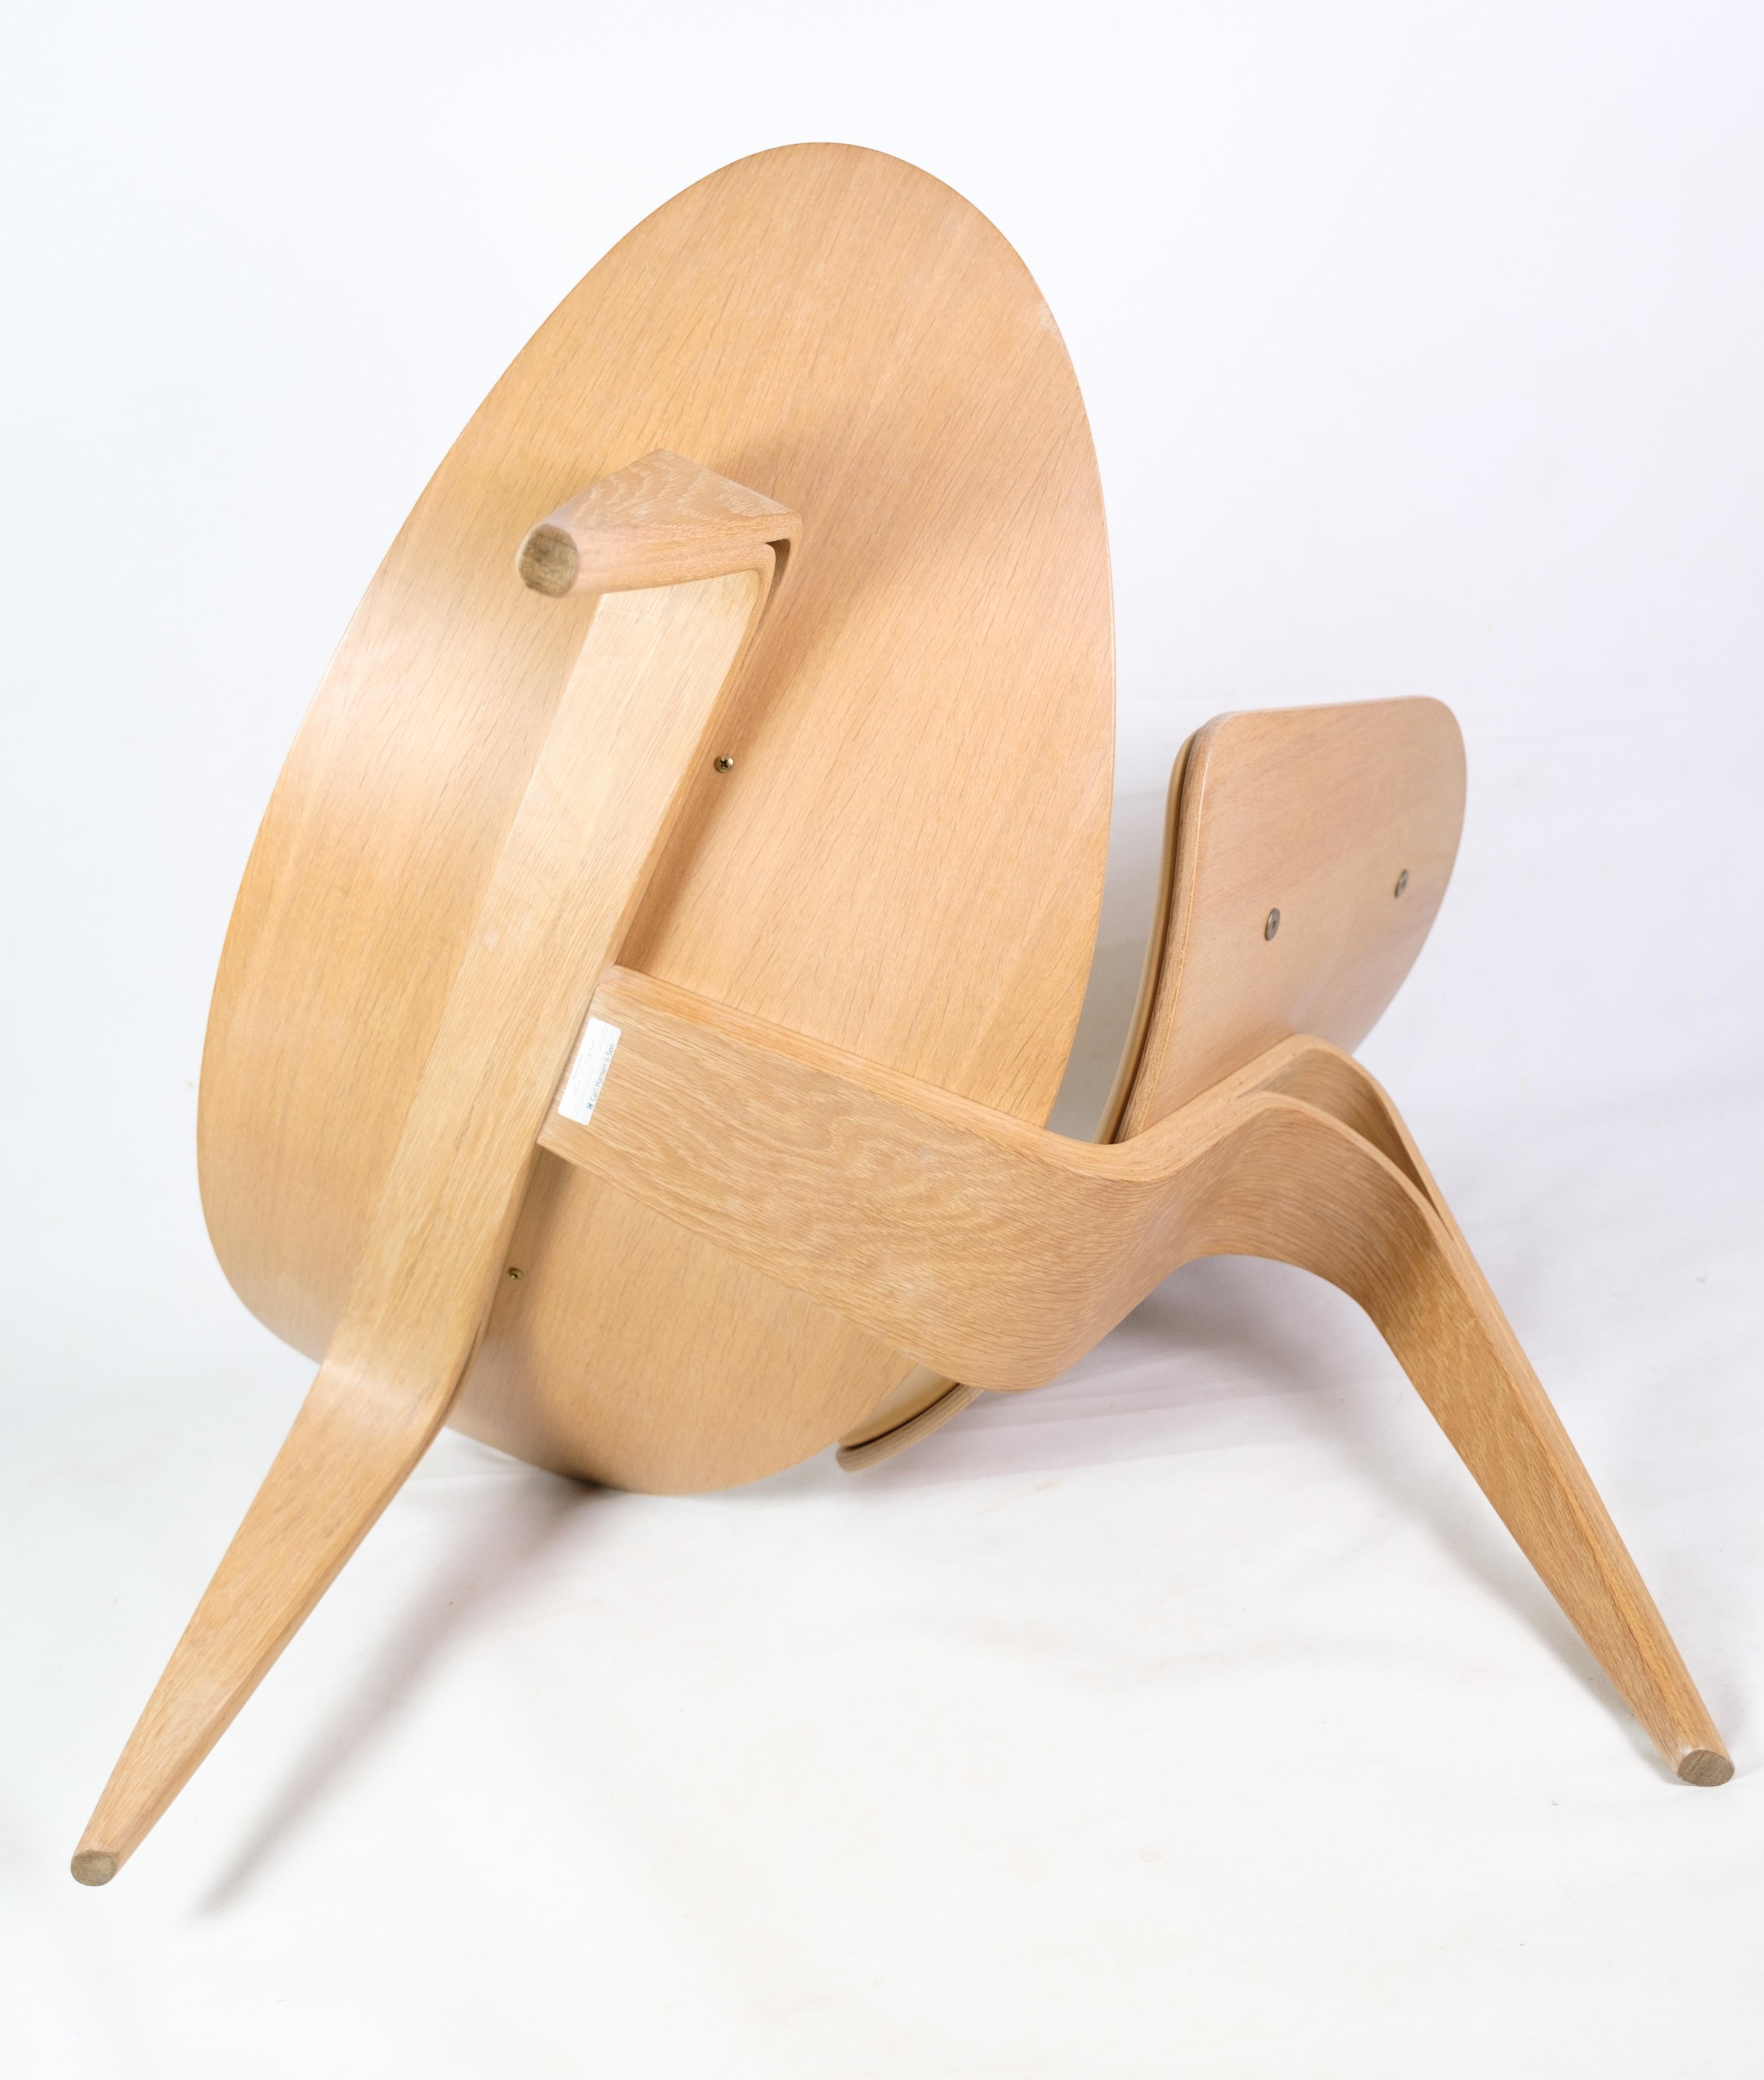 he shell chair model CH07, designed by Hans J. Wegner, made of oak from 2007 2